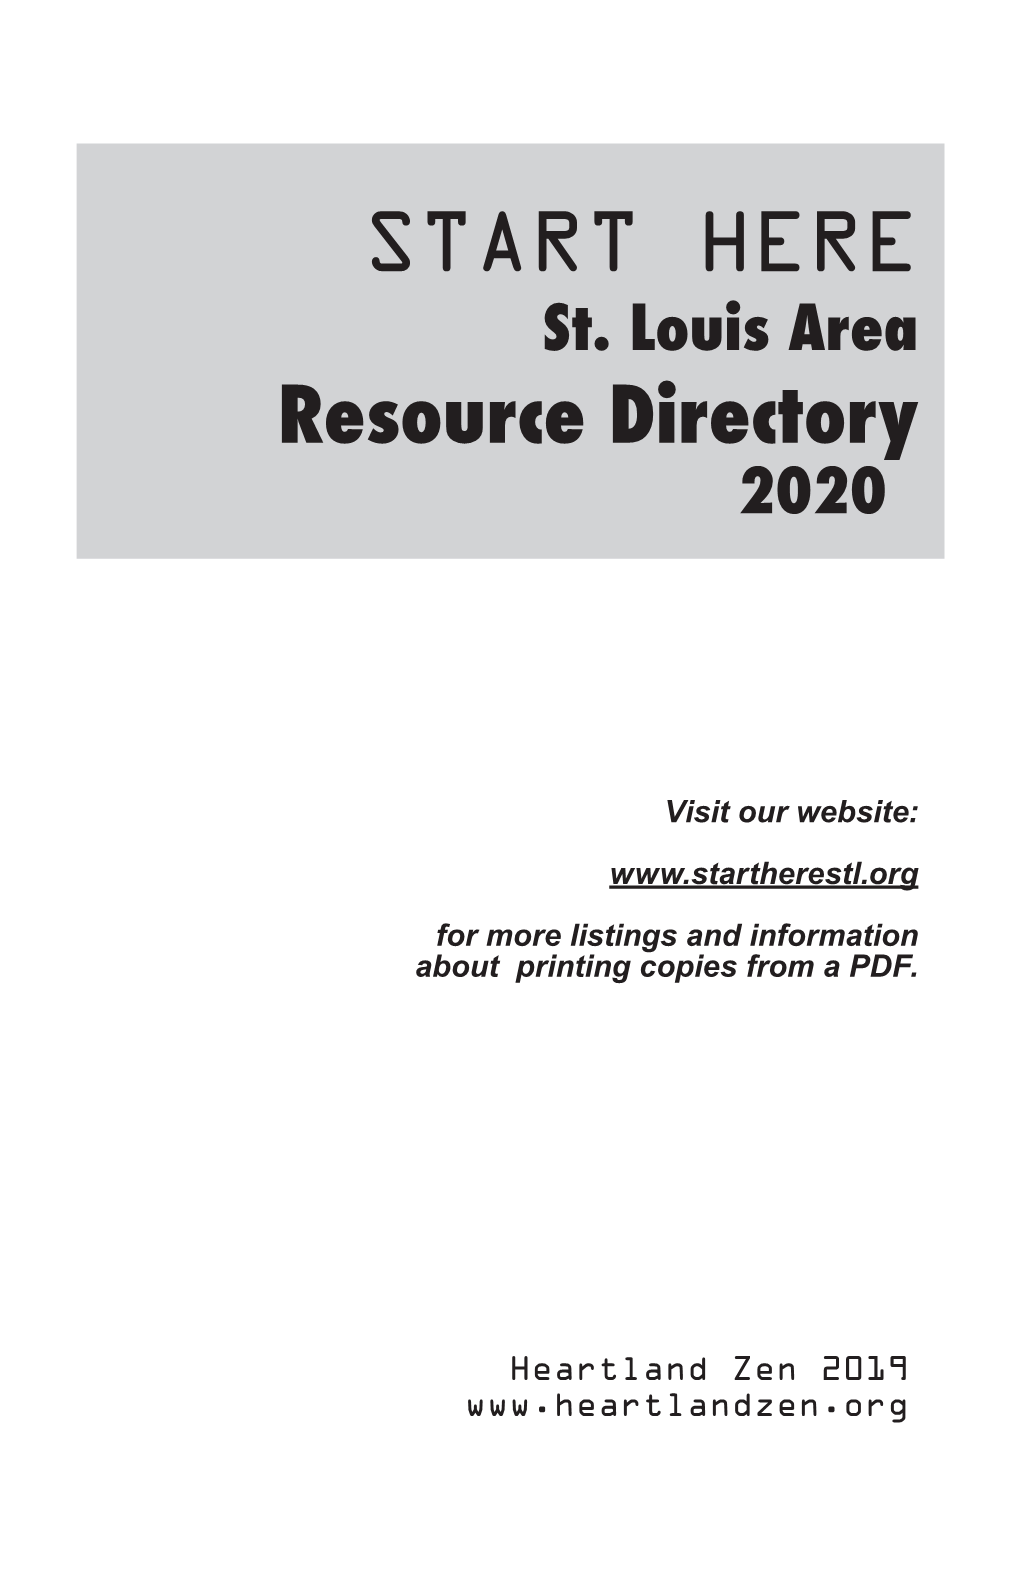 Resource Directory START HERE